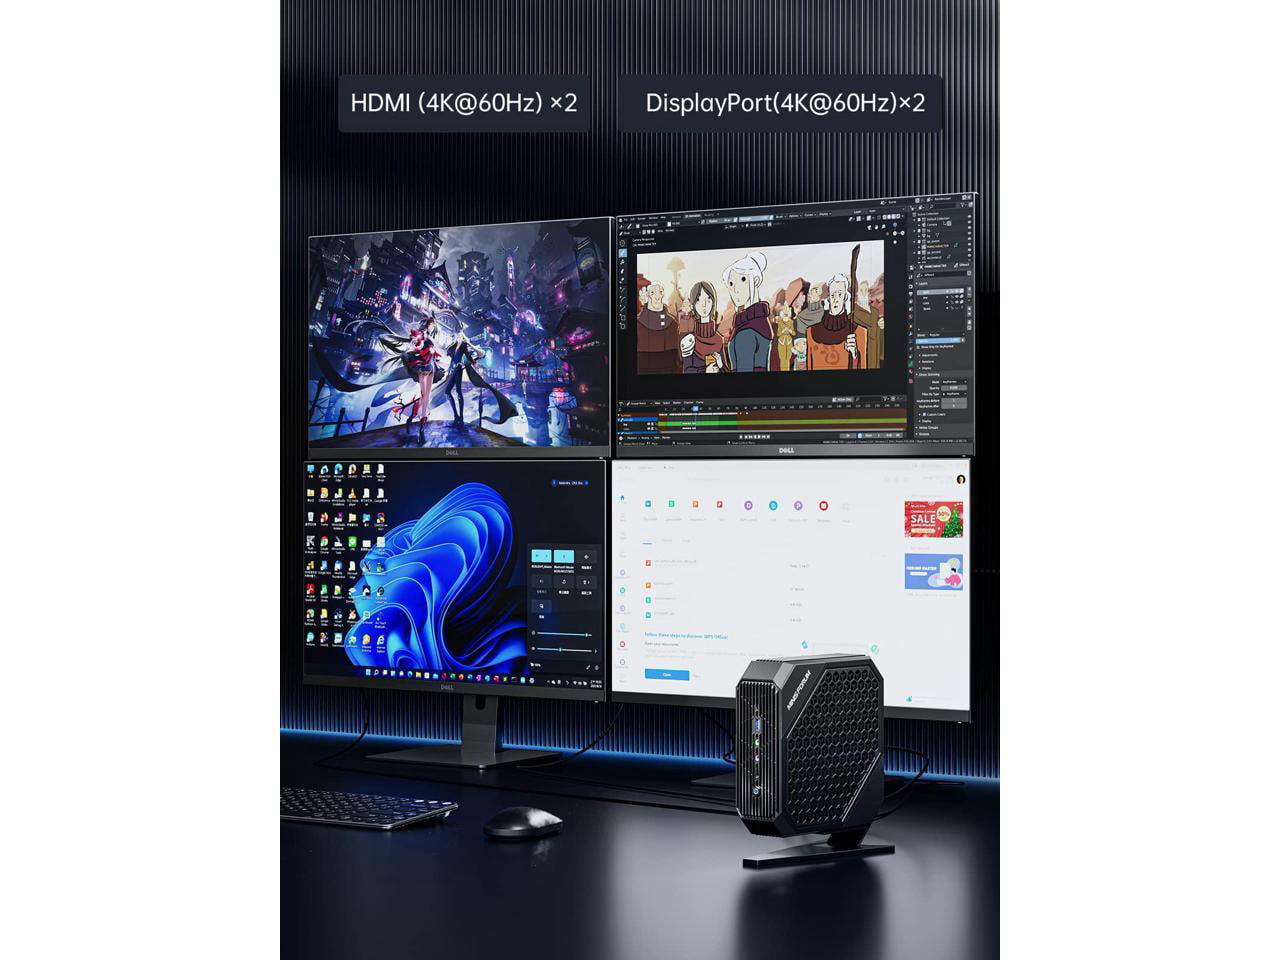 Minisforum Neptune HX99G: Gaming-ready mini PC with Ryzen 9 6900HX & RX  6600M